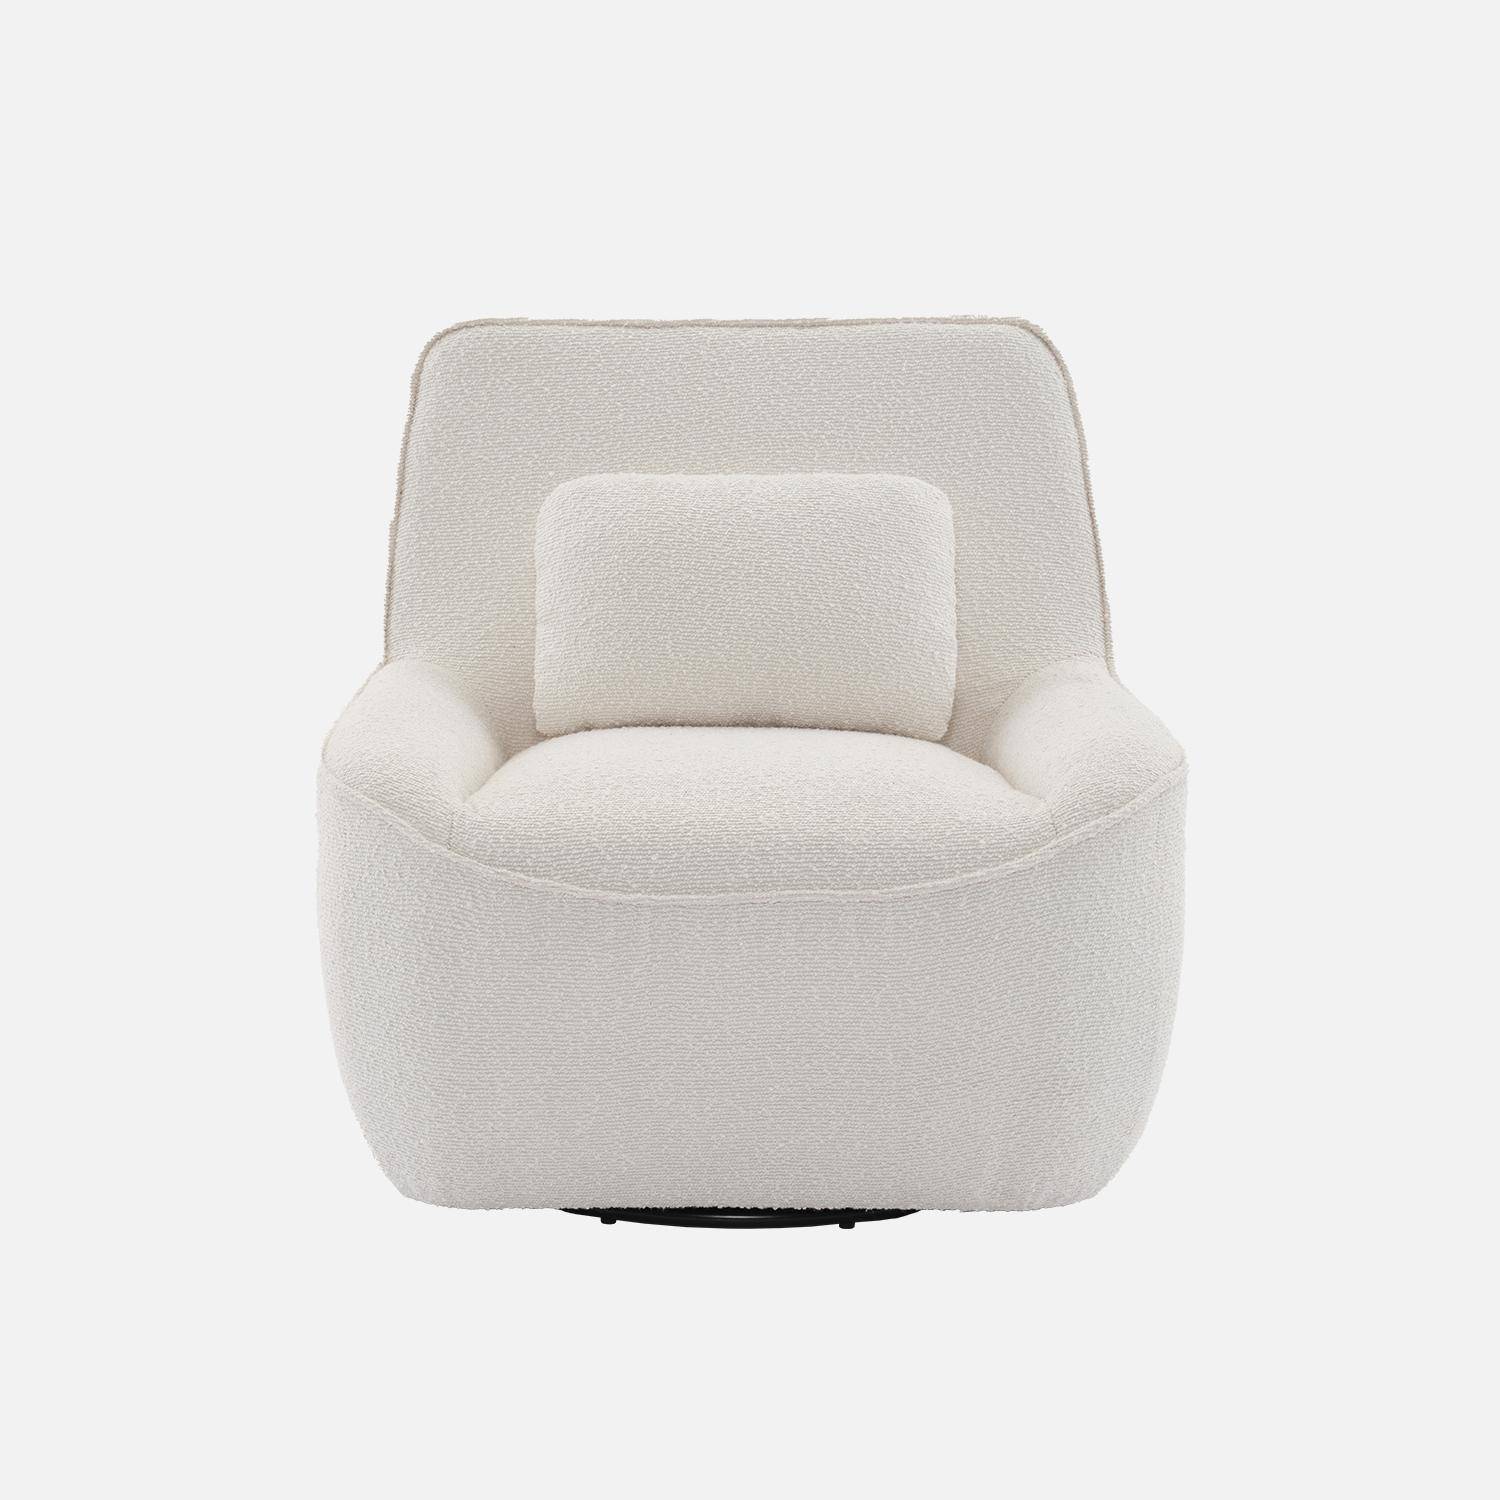 360° draaibare fauteuil in wit bouclé afneembaar kussen, Lounge, B 83 x D 83 x H 83cm,sweeek,Photo5